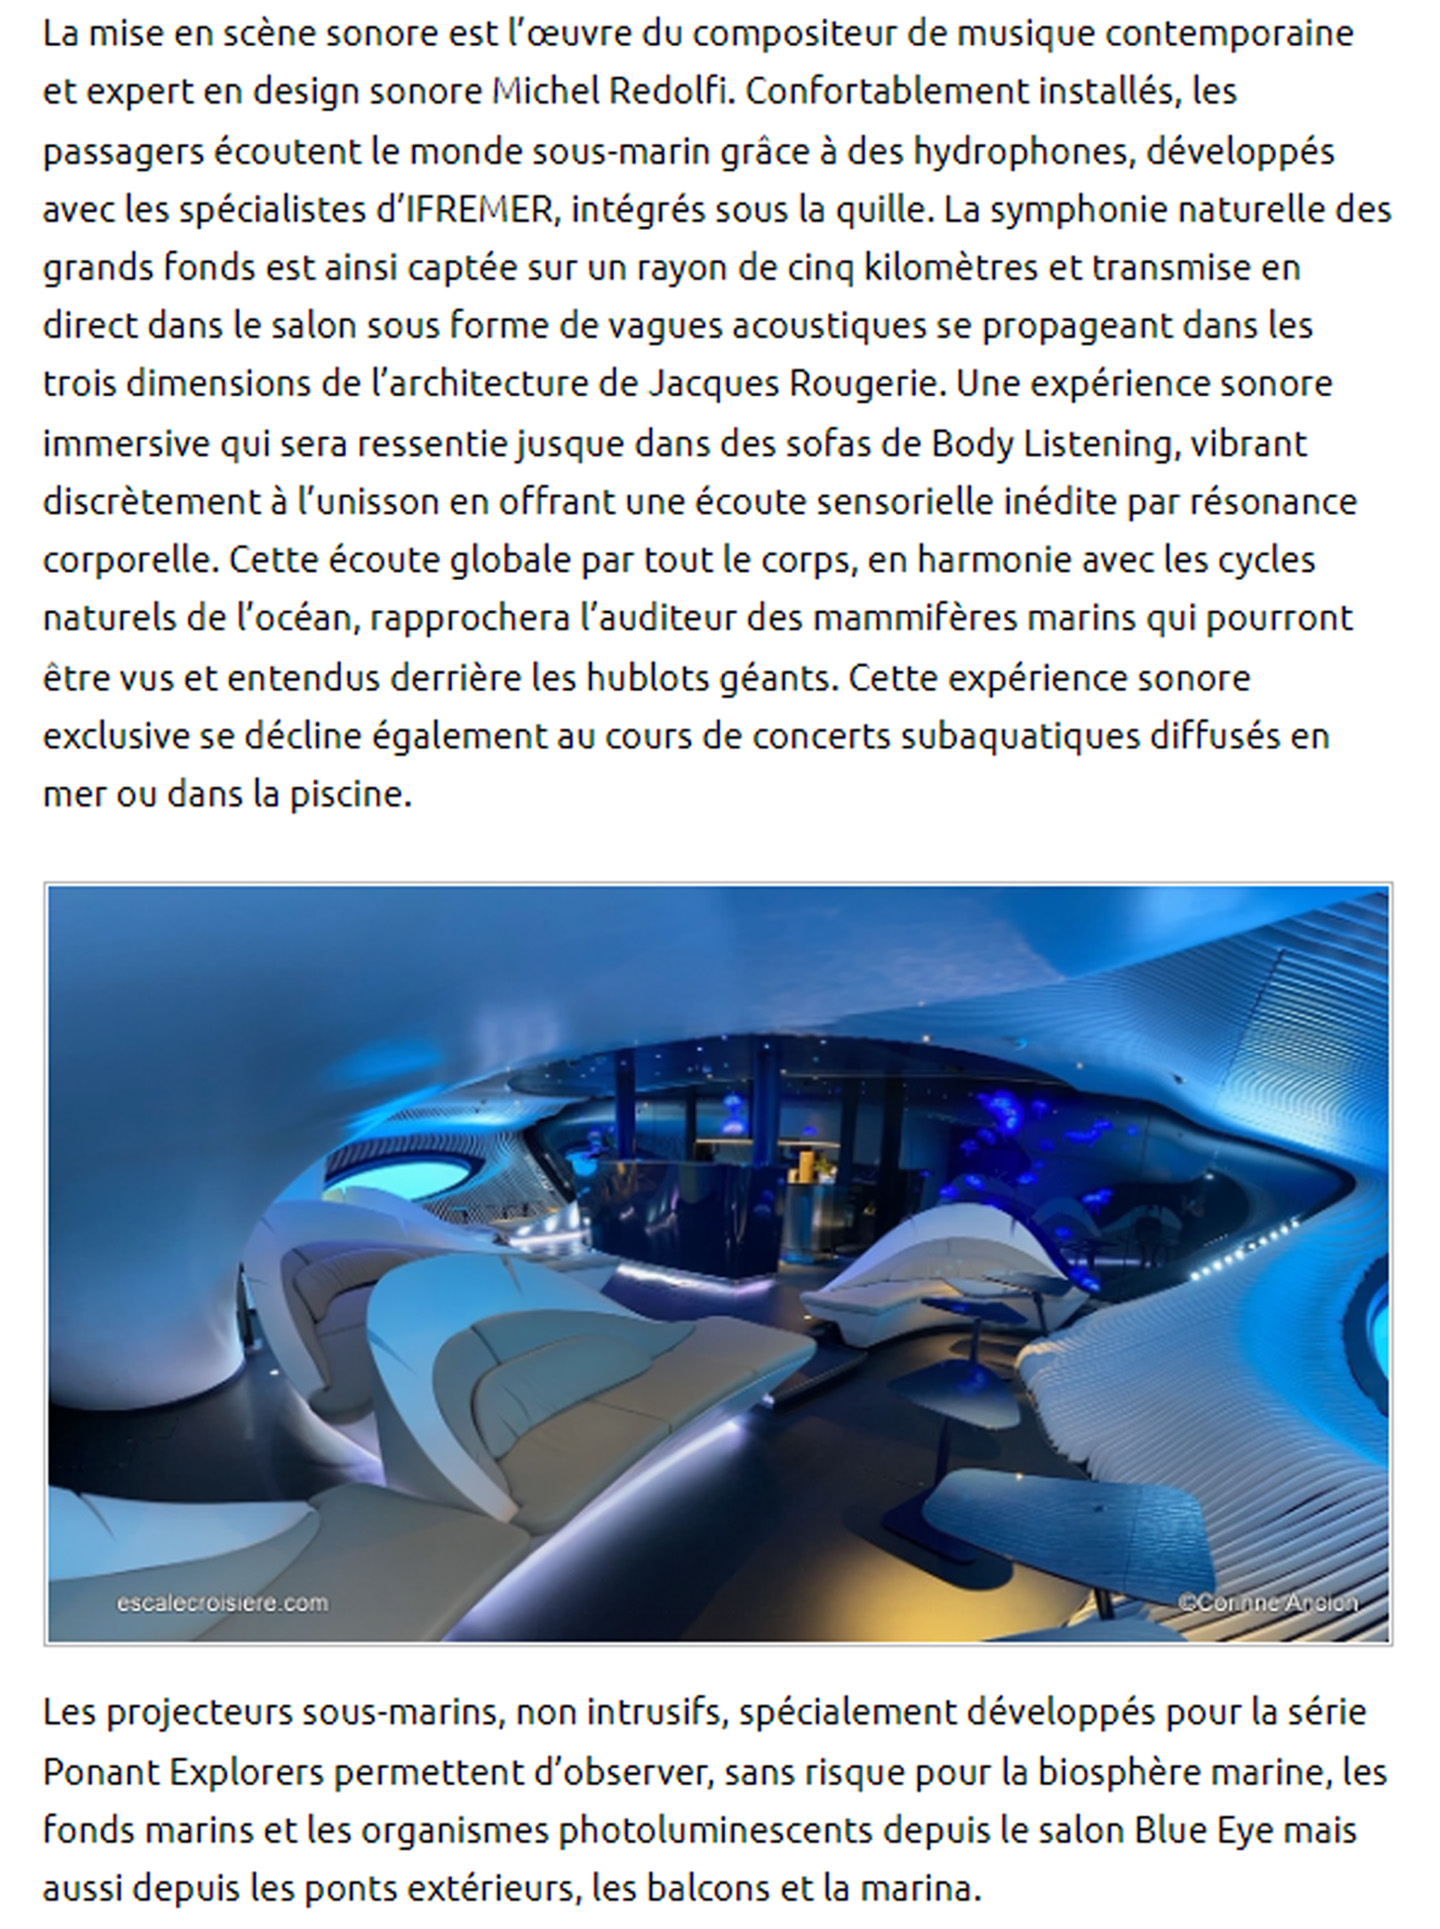 Article on Le Bougainville du Ponant designed by jean-Philippe Nuel studio in the magazine escale croisière, luxury cruise ship, interior design